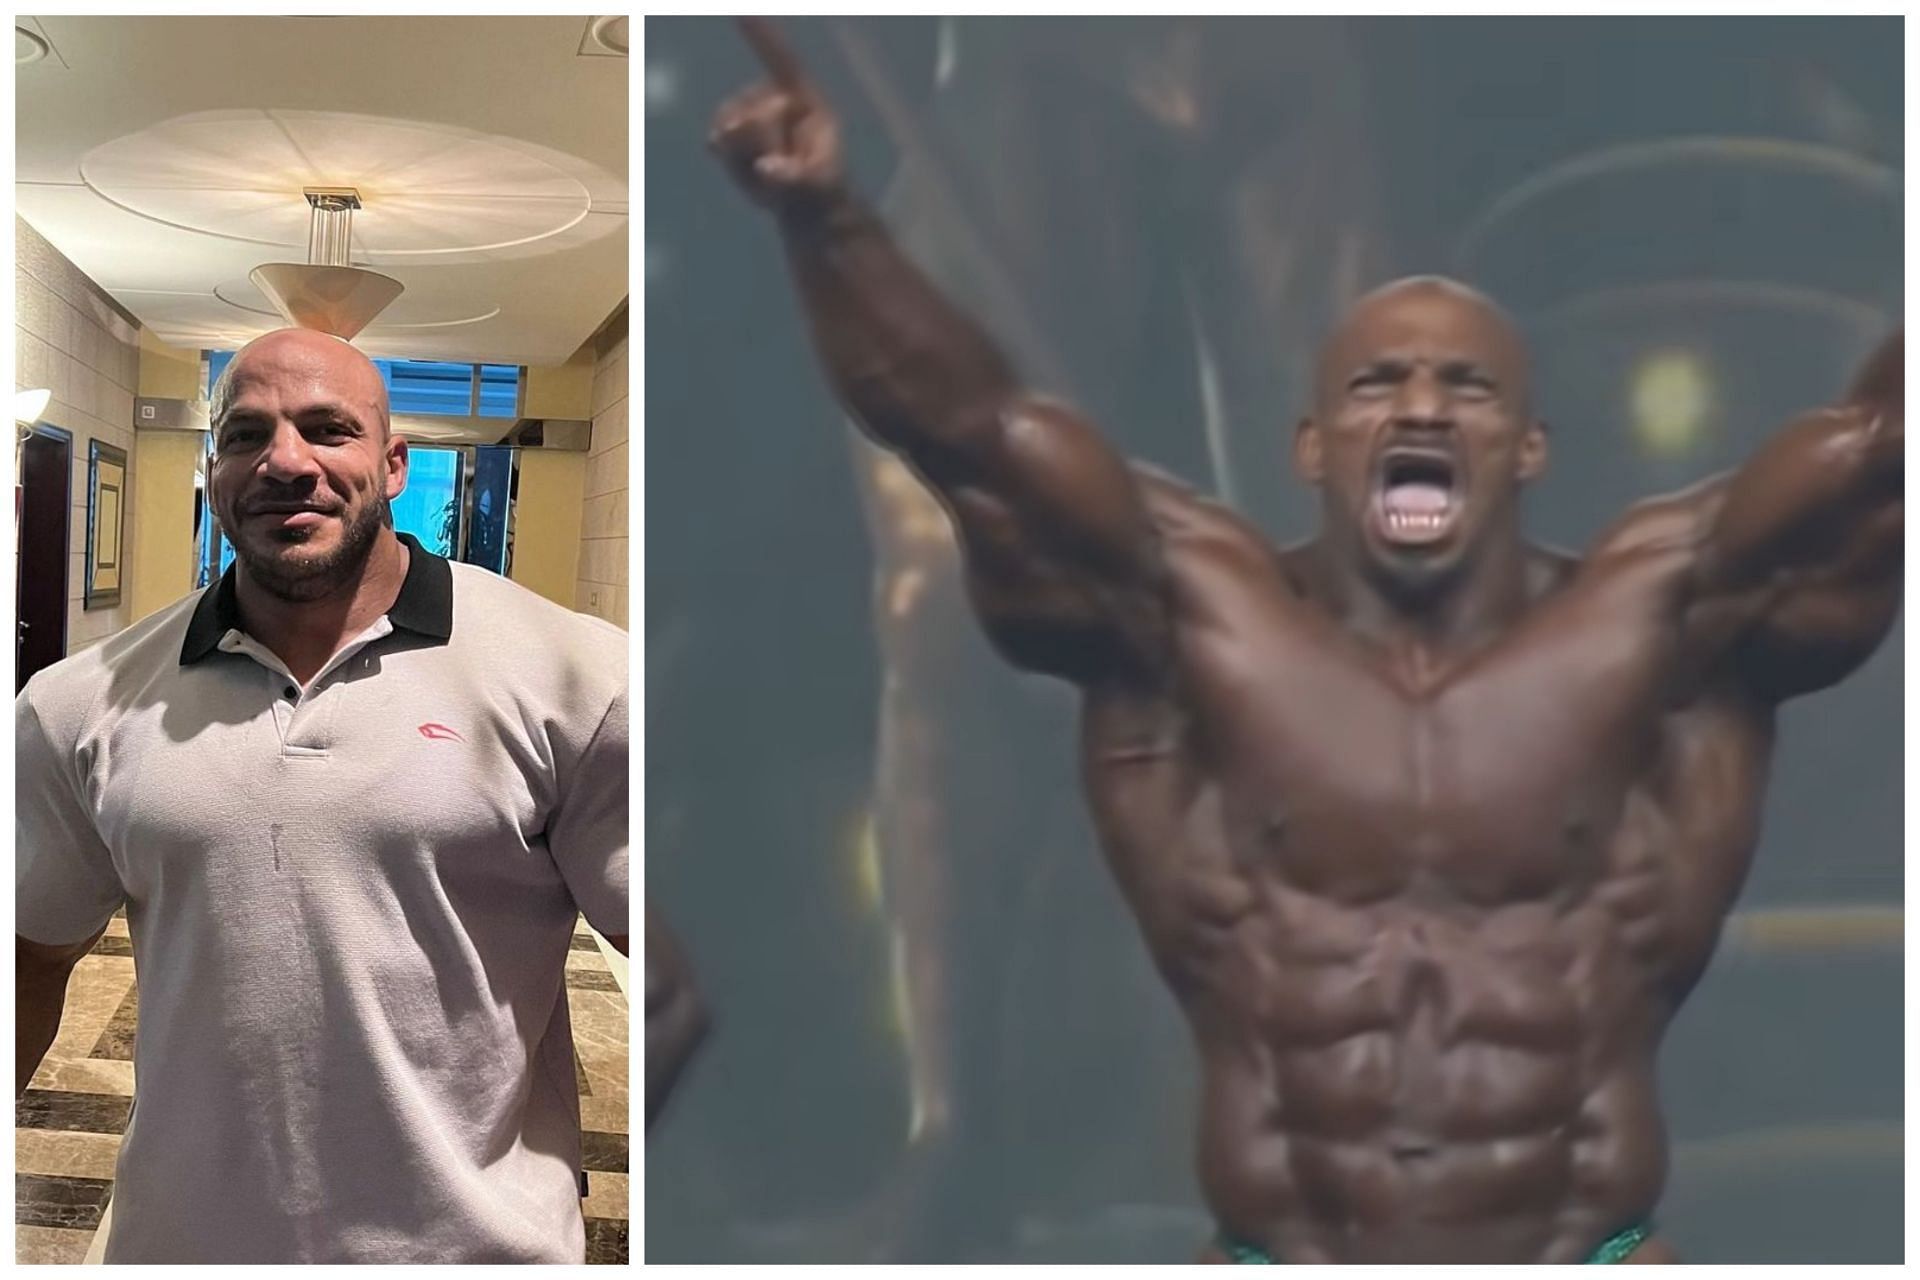 Two-time Mr. Olympia Big Ramy: Image via YouTube (@Bodybuilding) and Instagram (@big_ramy)